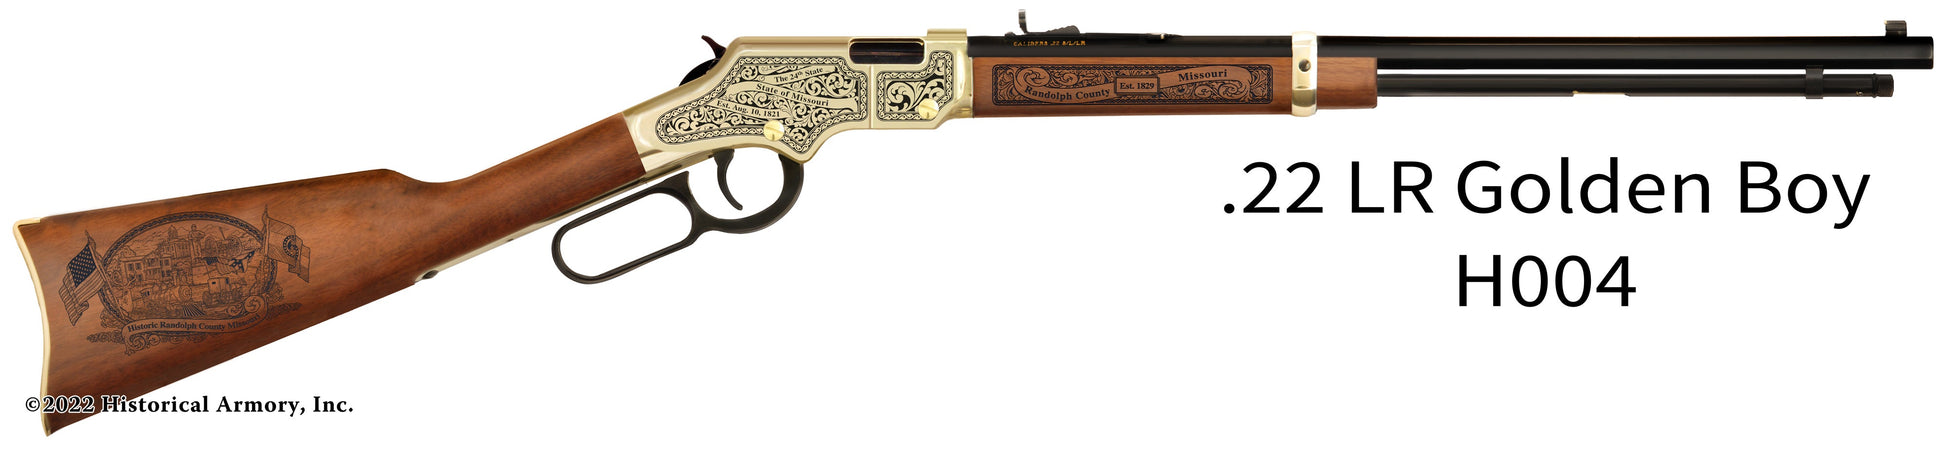 Randolph County Missouri Engraved Henry Golden Boy Rifle